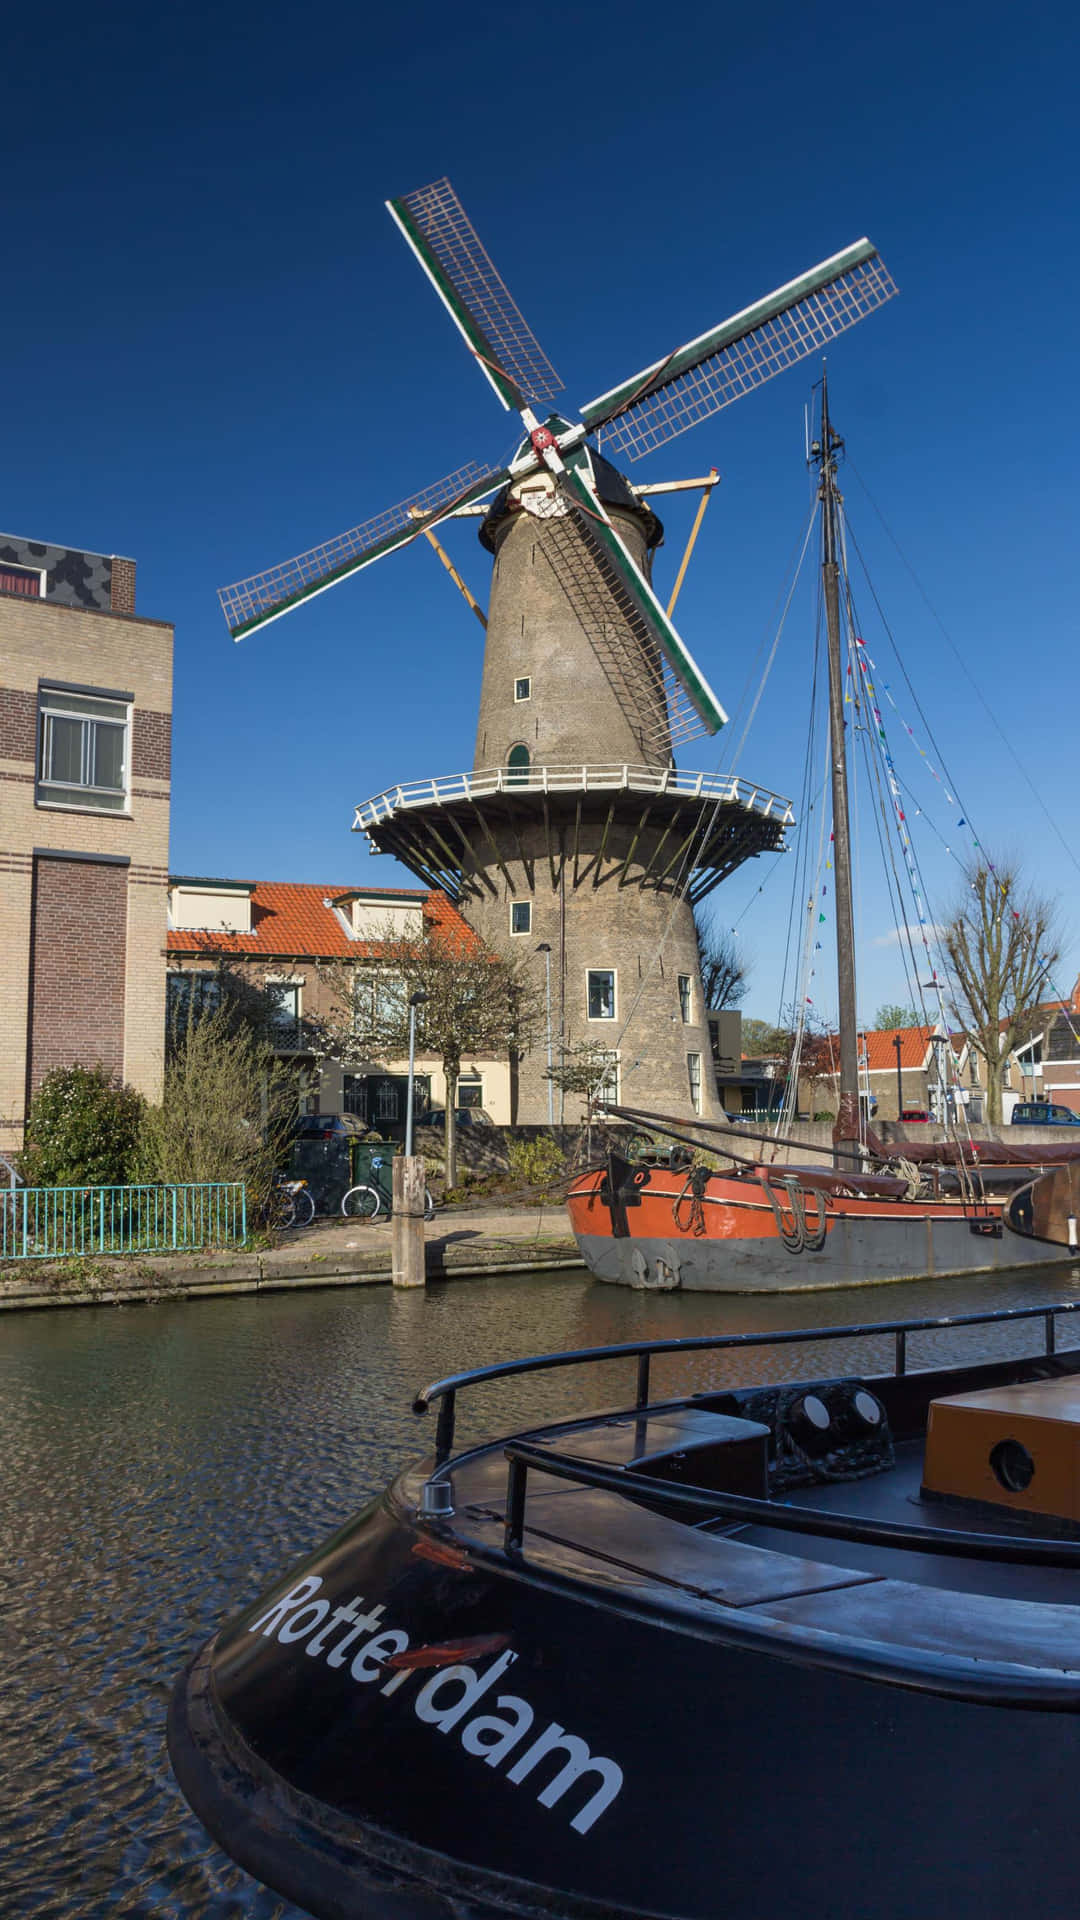 Gouda Windmilland Boat Netherlands Wallpaper